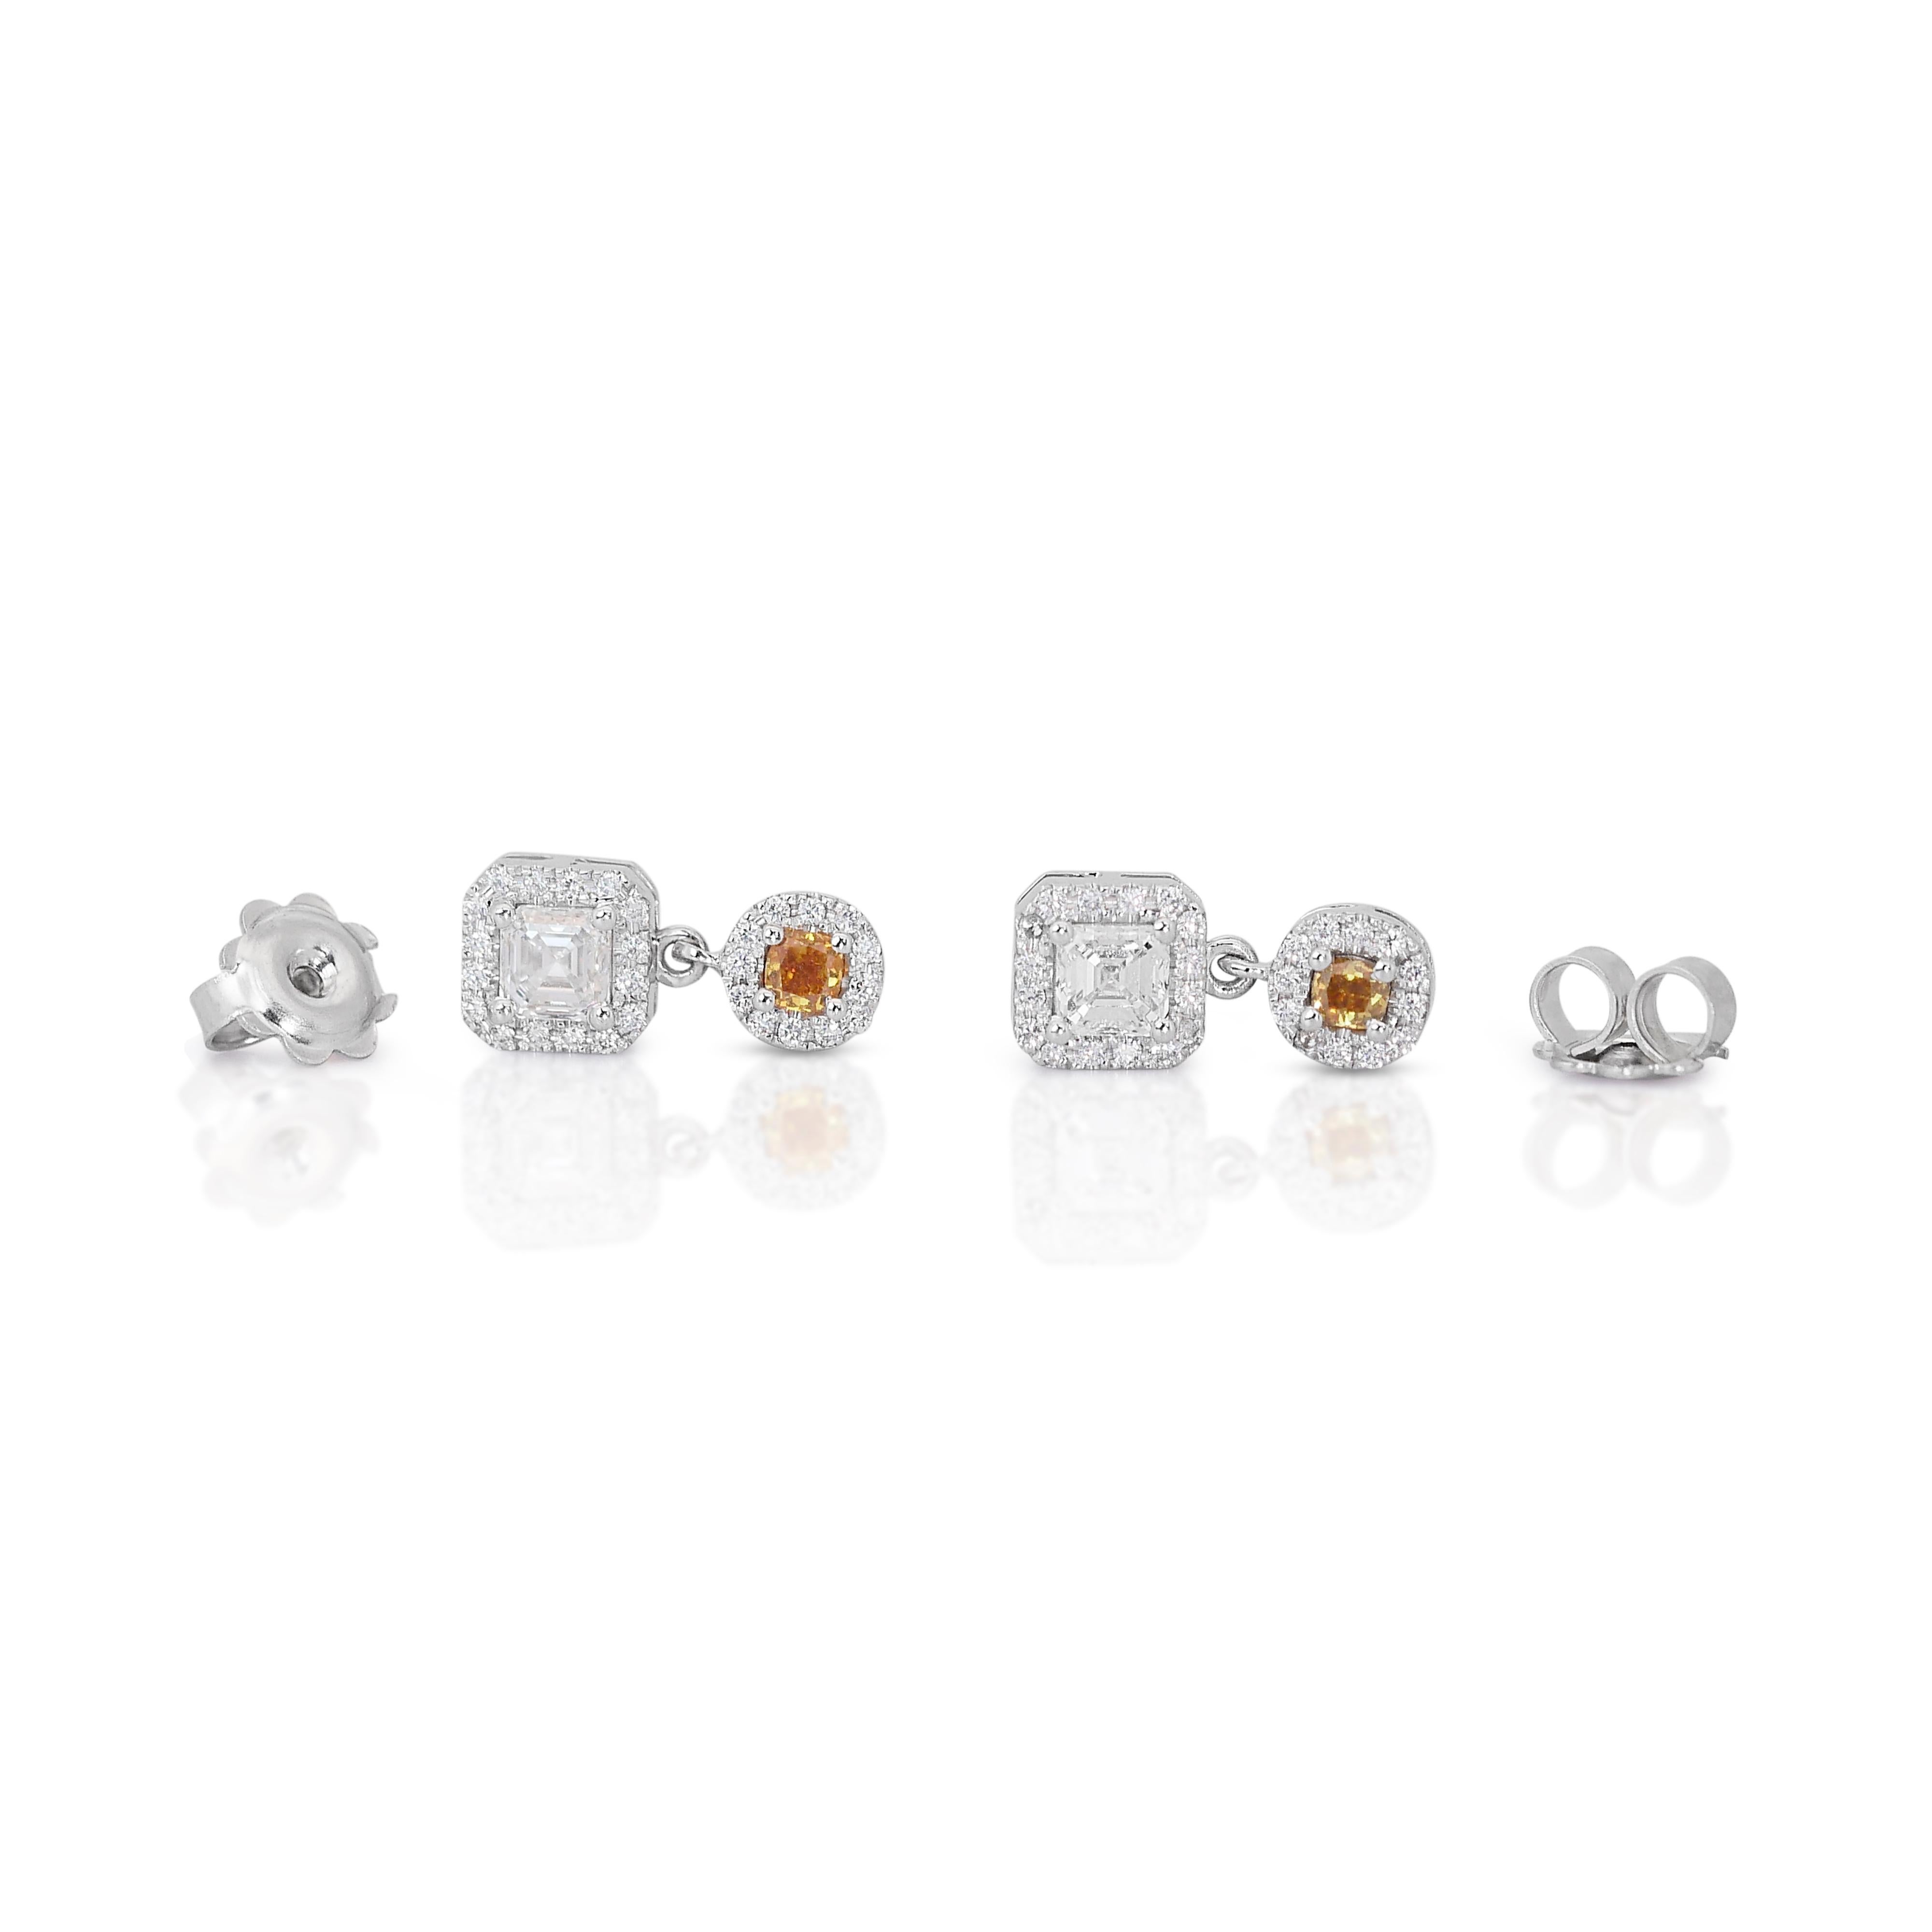 Captivating 1.27ct Diamonds Drop Earrings in 14k White Gold - IGI Certified 3